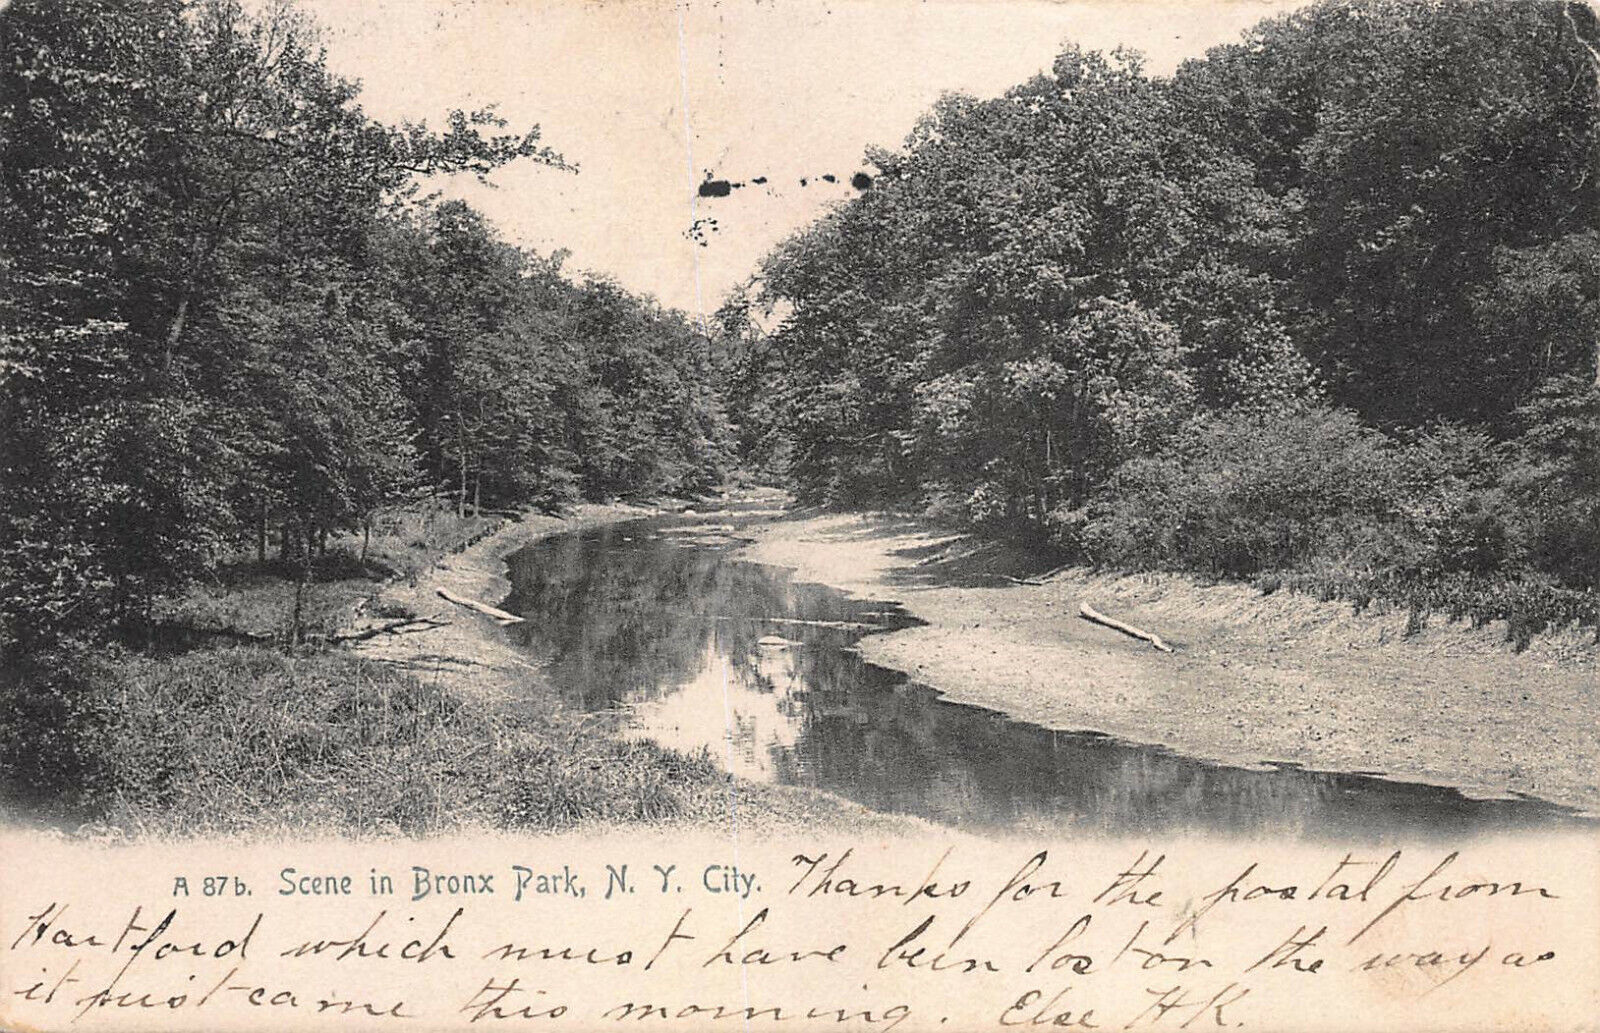 Scene in Bronx Park, Bronx, N.Y.C., Early Postcard, Used in 1906, Forwarded